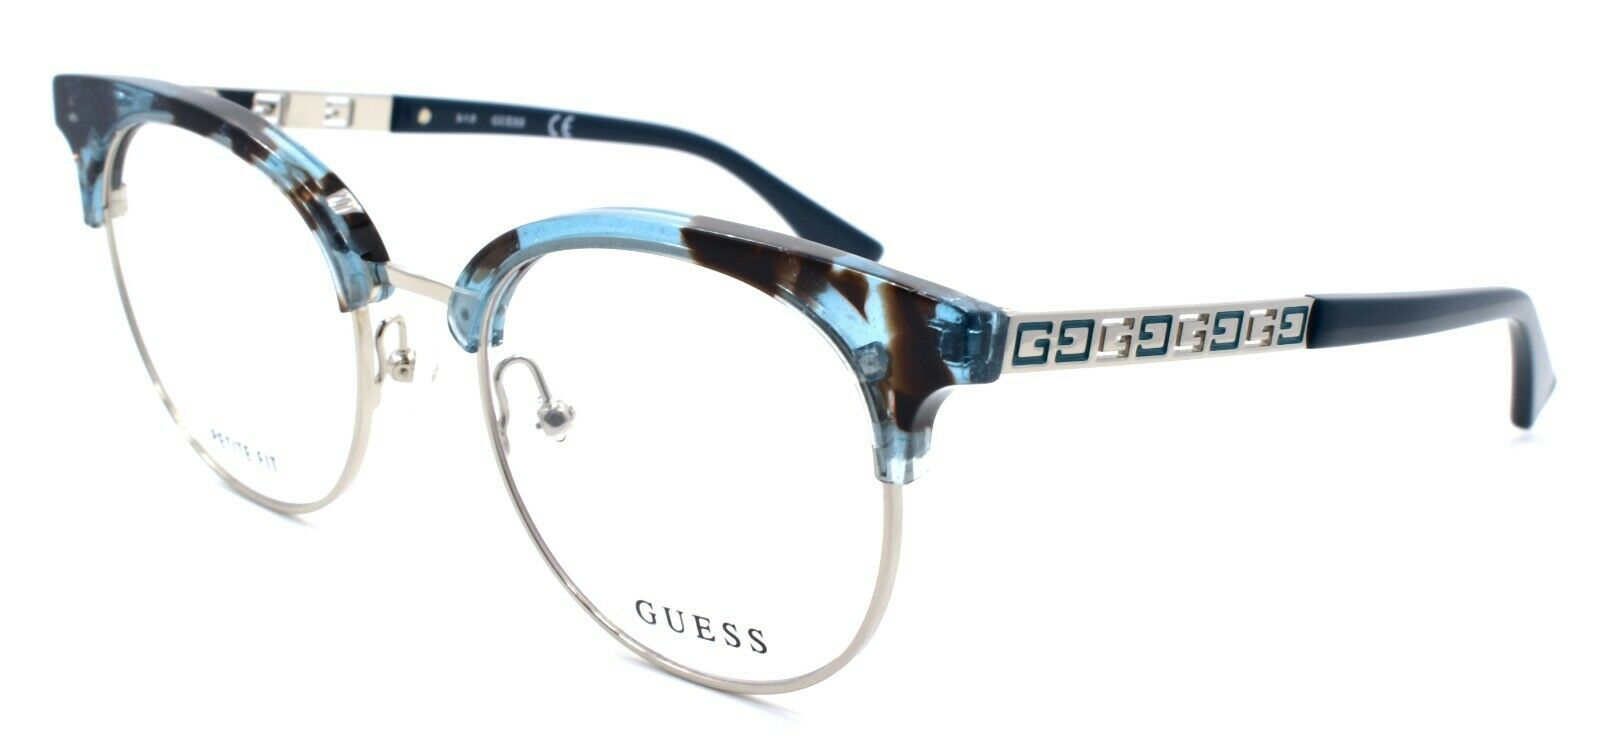 1-GUESS GU2744 089 Women's Eyeglasses Frames Petite 49-19-140 Turquoise / Silver-889214111210-IKSpecs